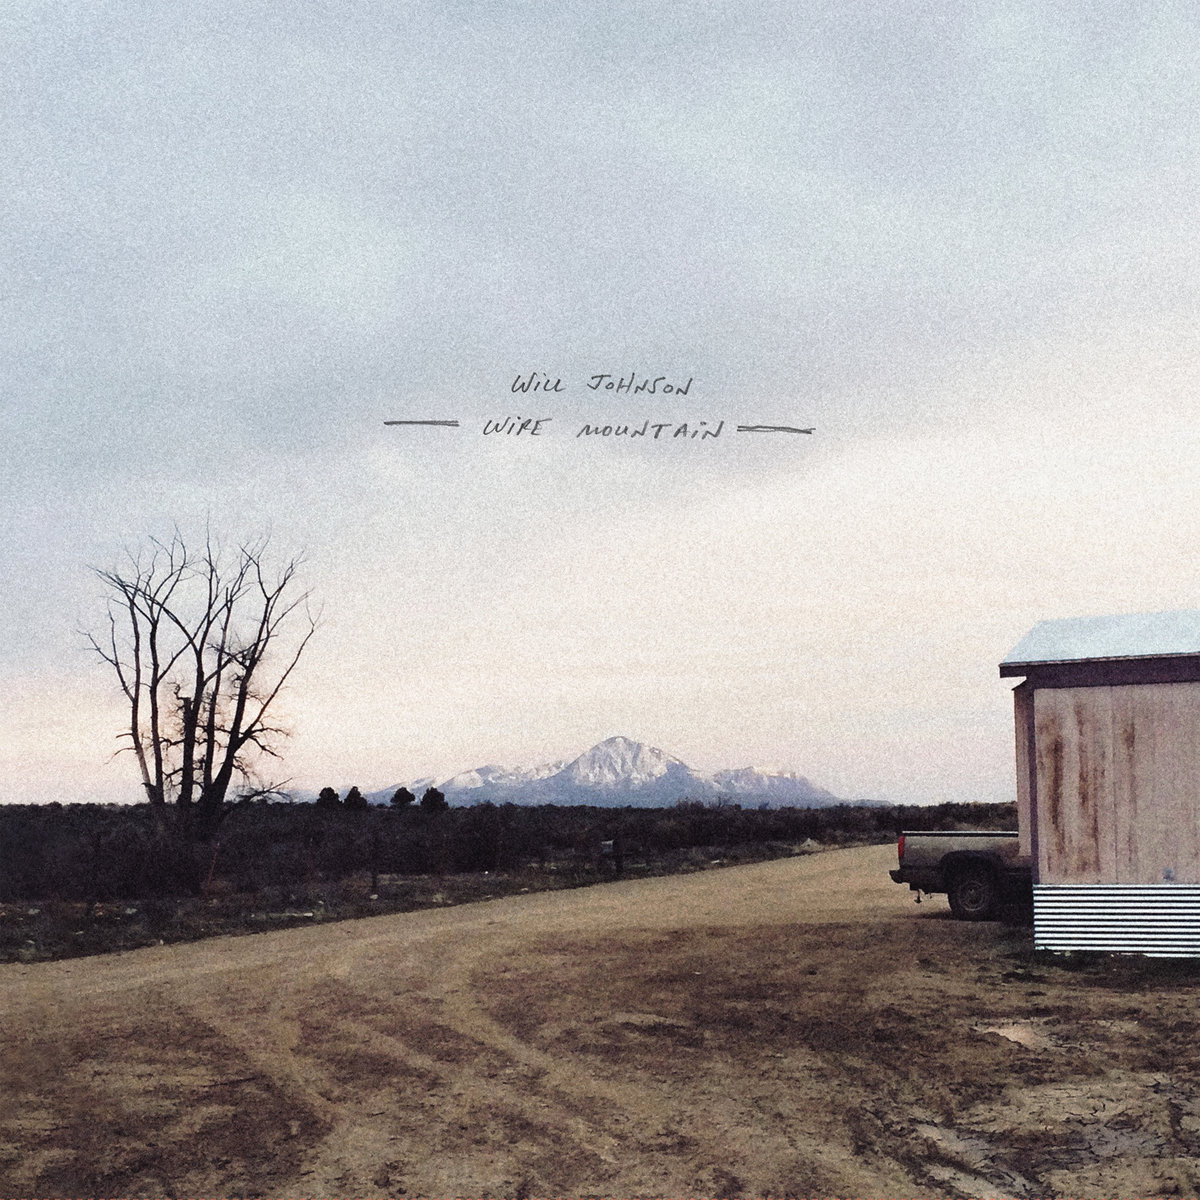 will johnson wire mountain album cover photo of desolate field and barn